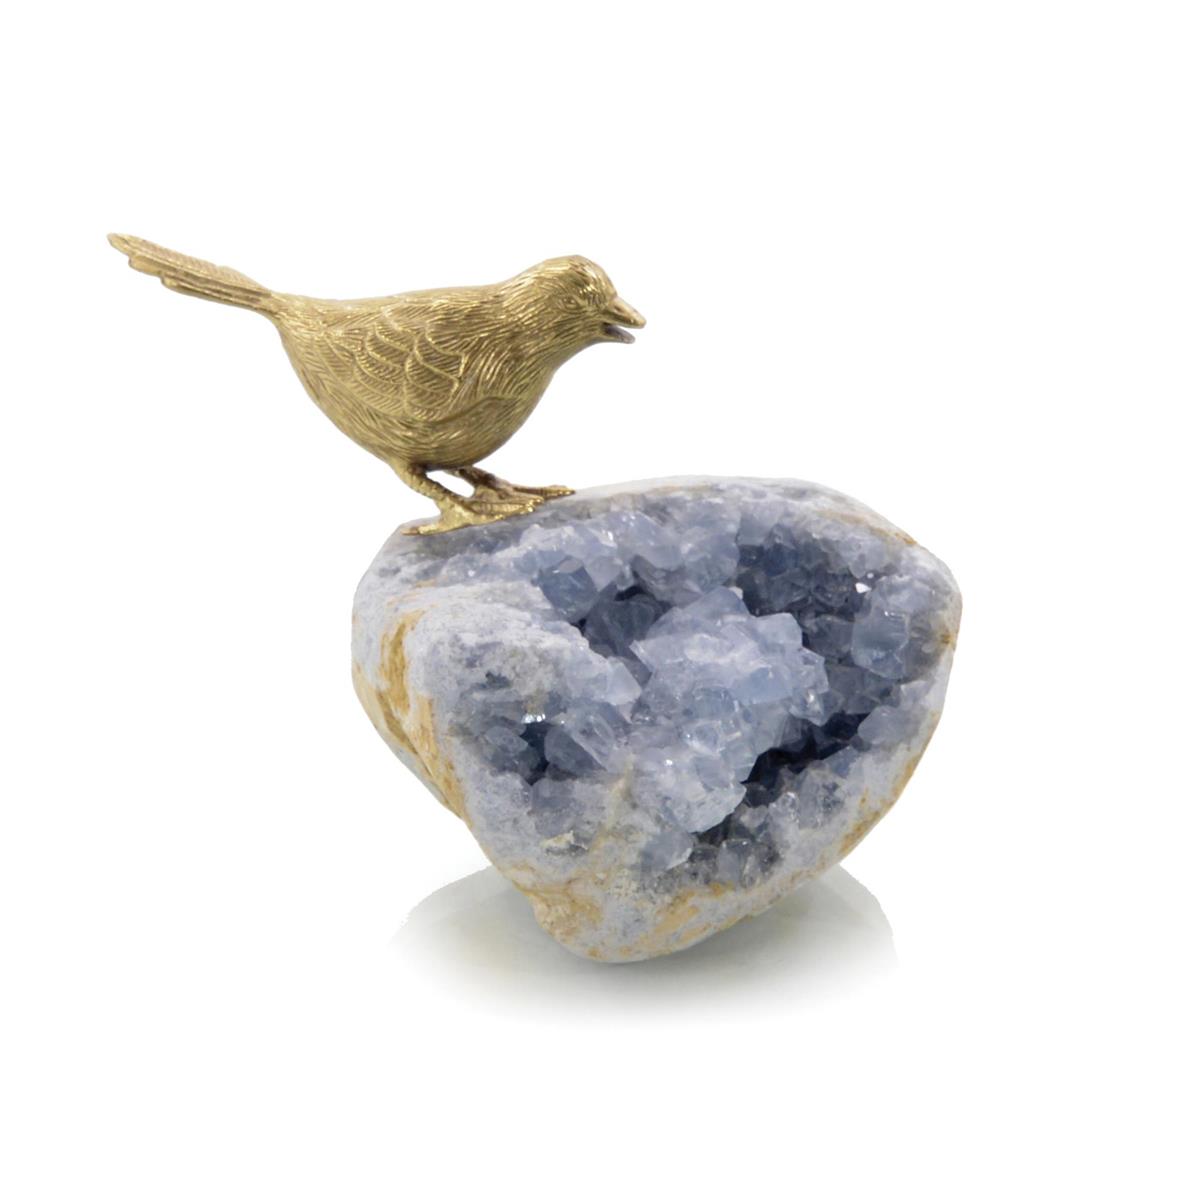 Bird On Celestite Rock-John Richard-JR-JRA-11624-Decorative ObjectsI-1-France and Son